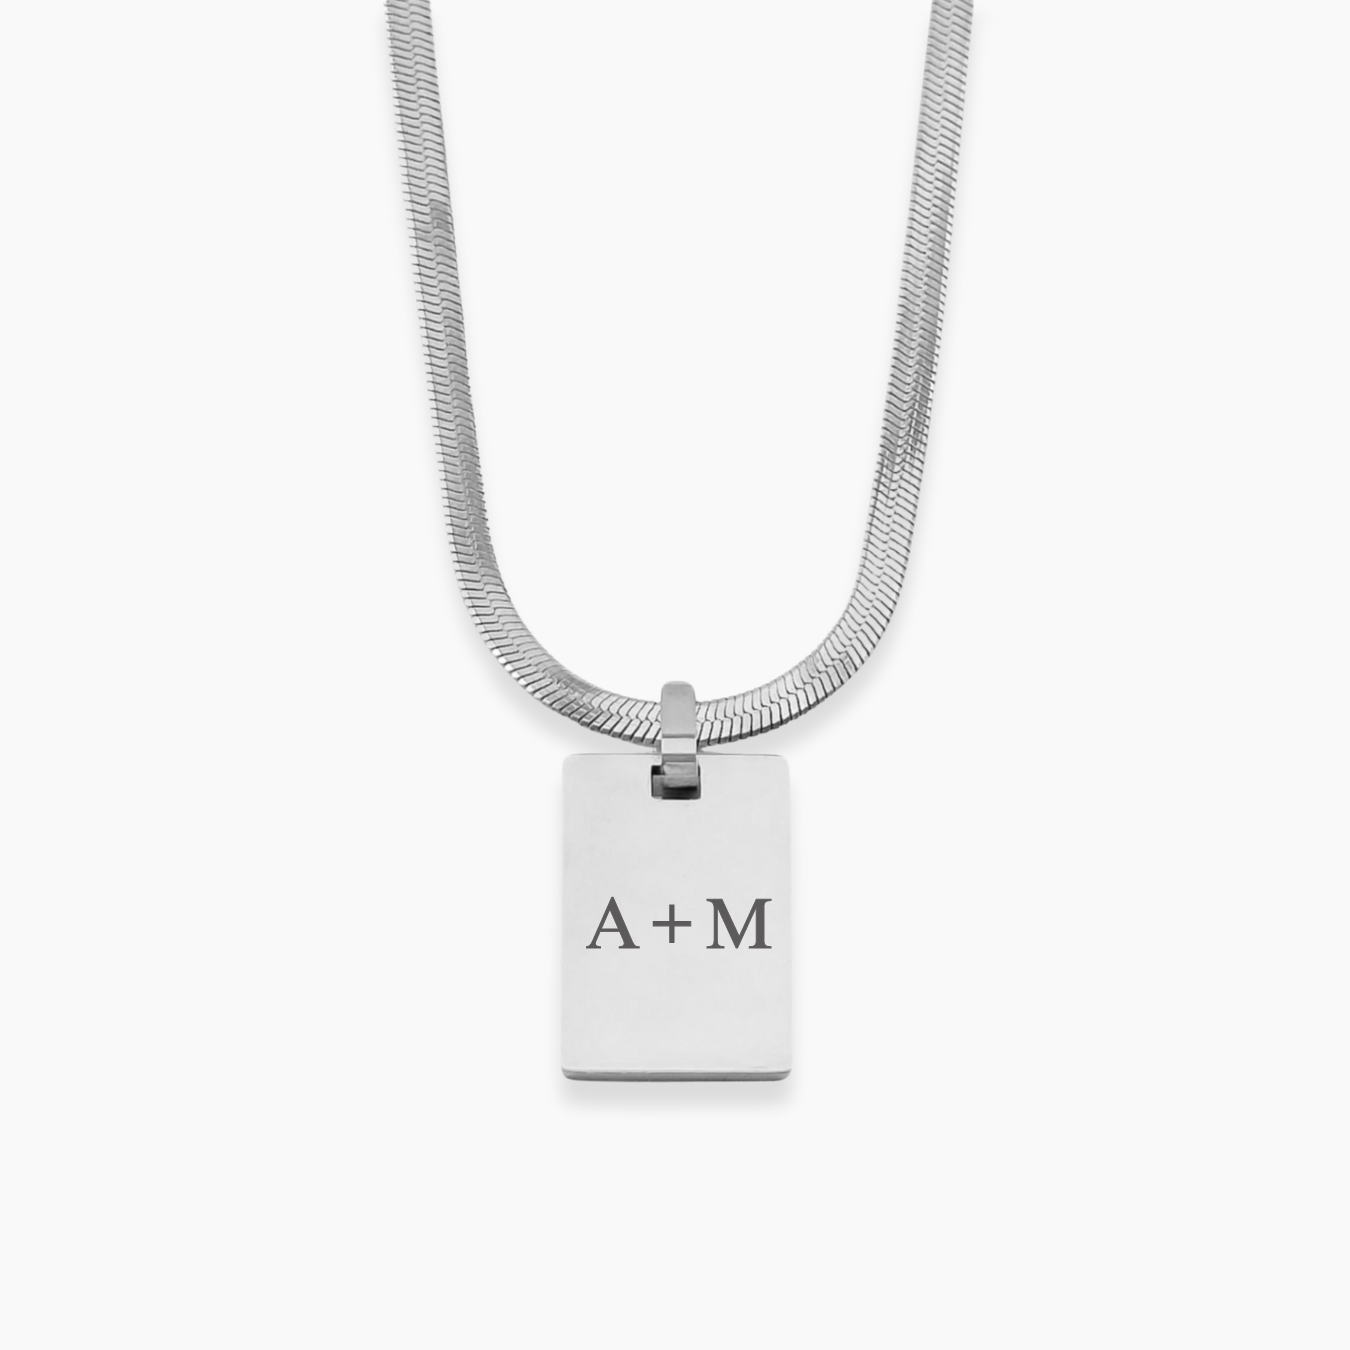 AZUR Personalizable Necklace | Initials